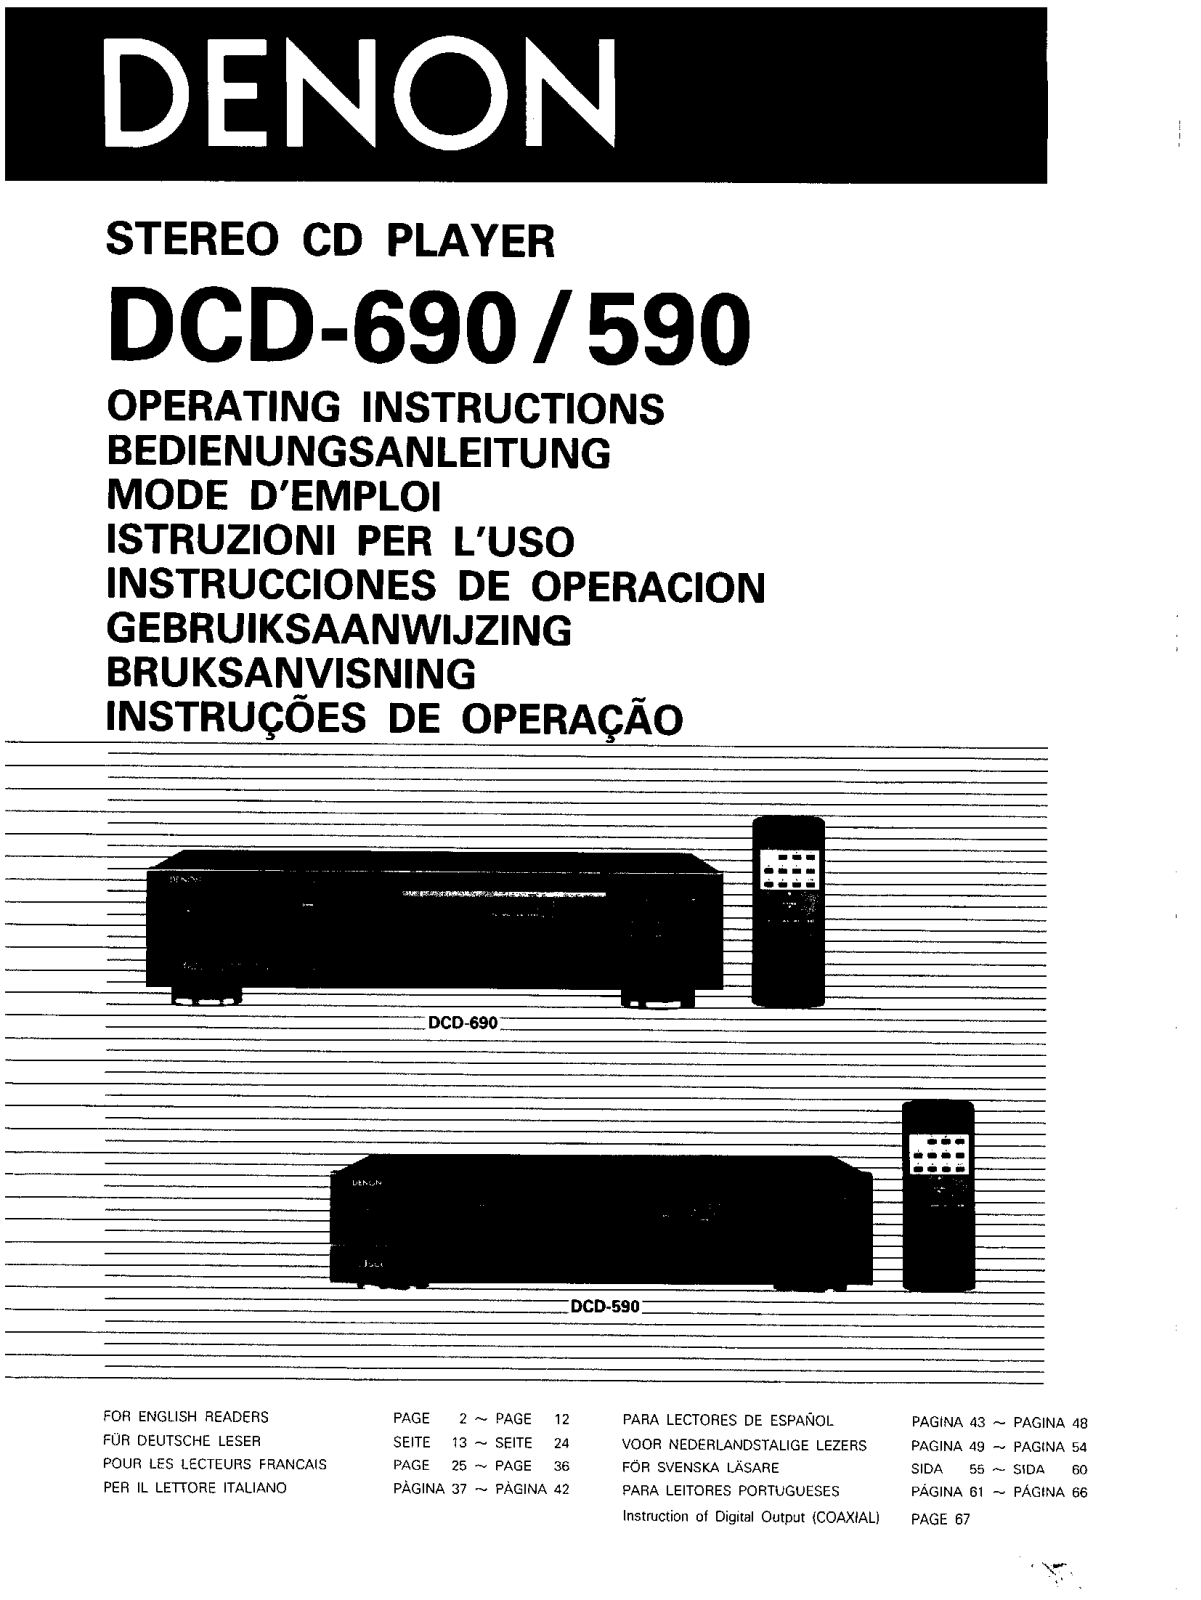 Denon DCD-590, DCD-690 Owner's Manual